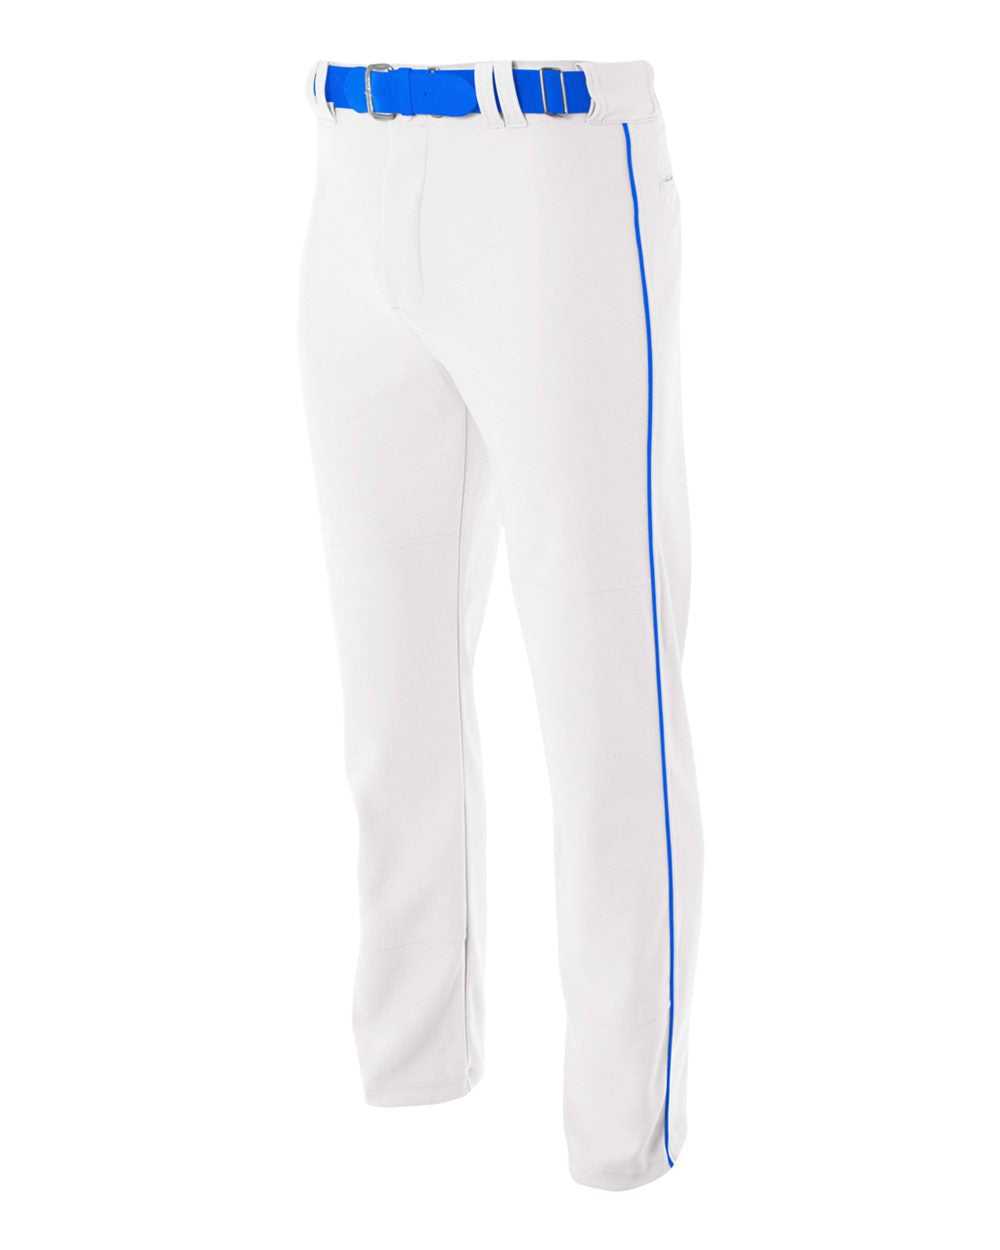 A4 N6162 Pro Style Open Bottom Baggy Cut Baseball Pant - White Royal